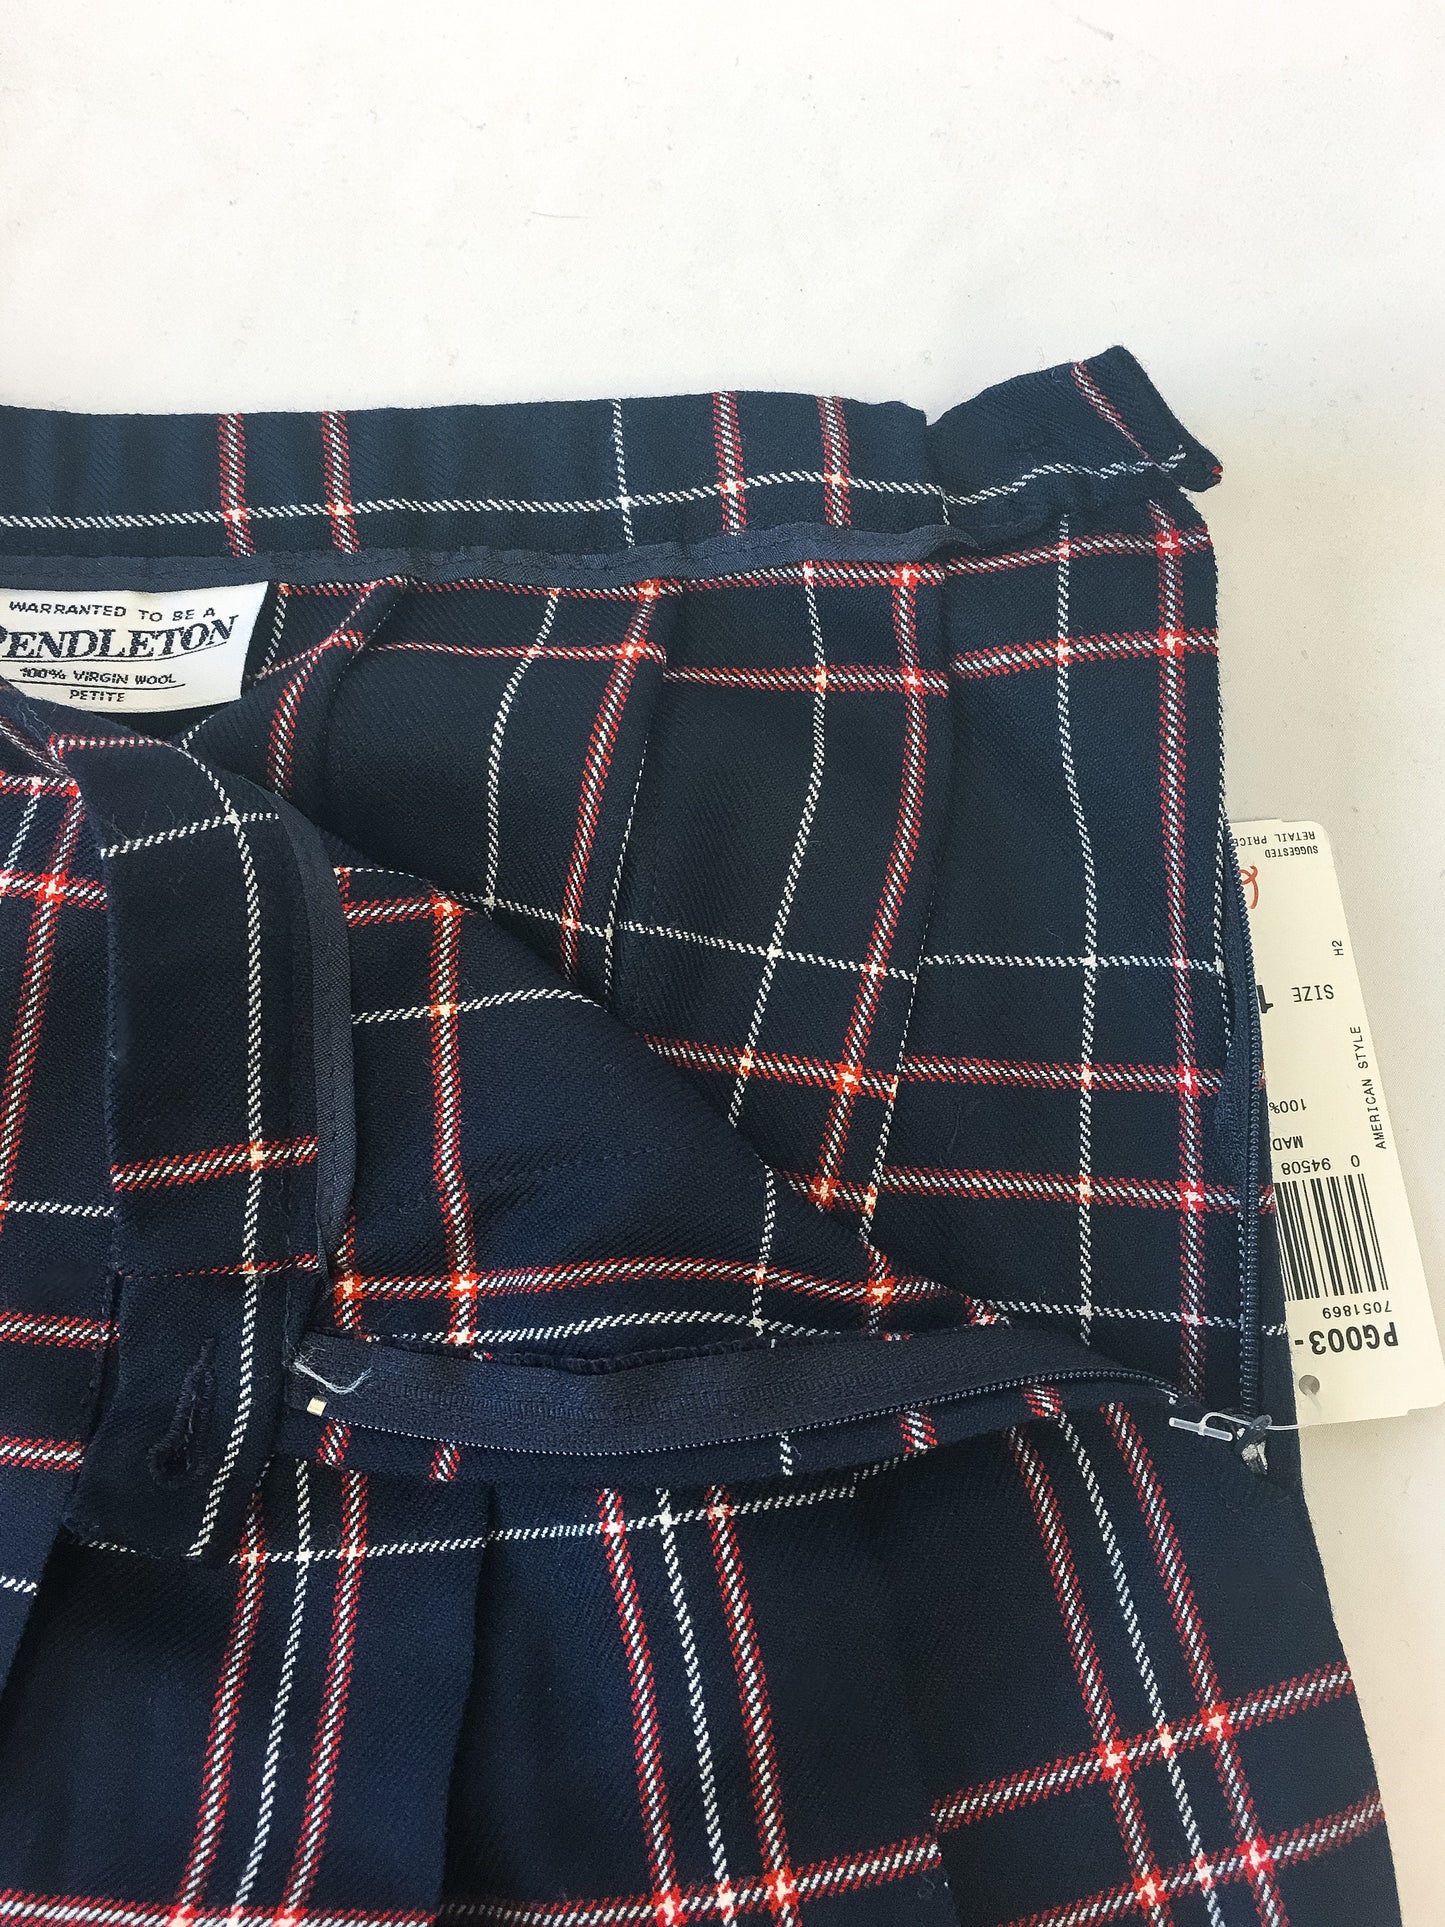 Vintage NWT 90s Pendleton Wool Navy Blue Tartan Print Maxi Skirt, Sz. 10 Petite, 1990s Virgin Wool Skirt